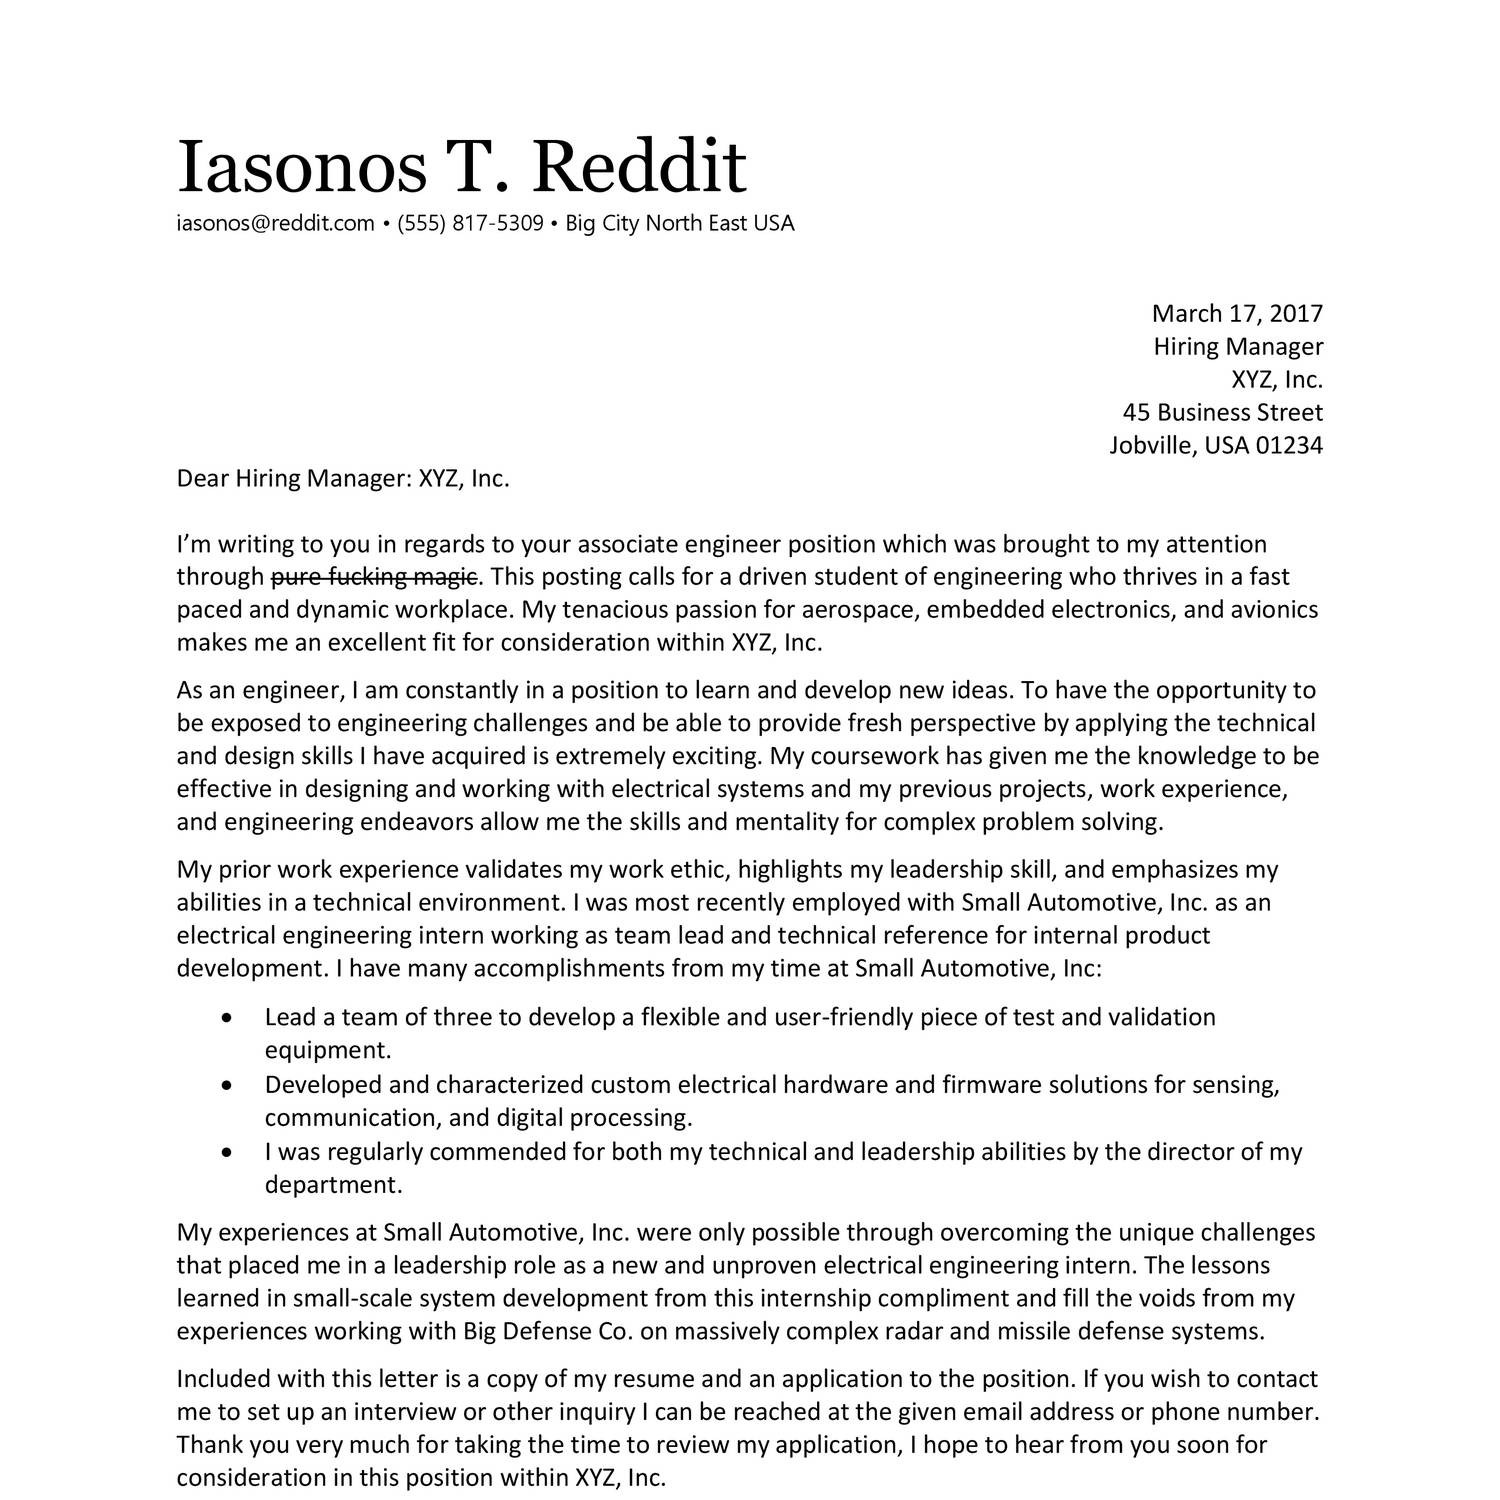 resume and cover letter service reddit